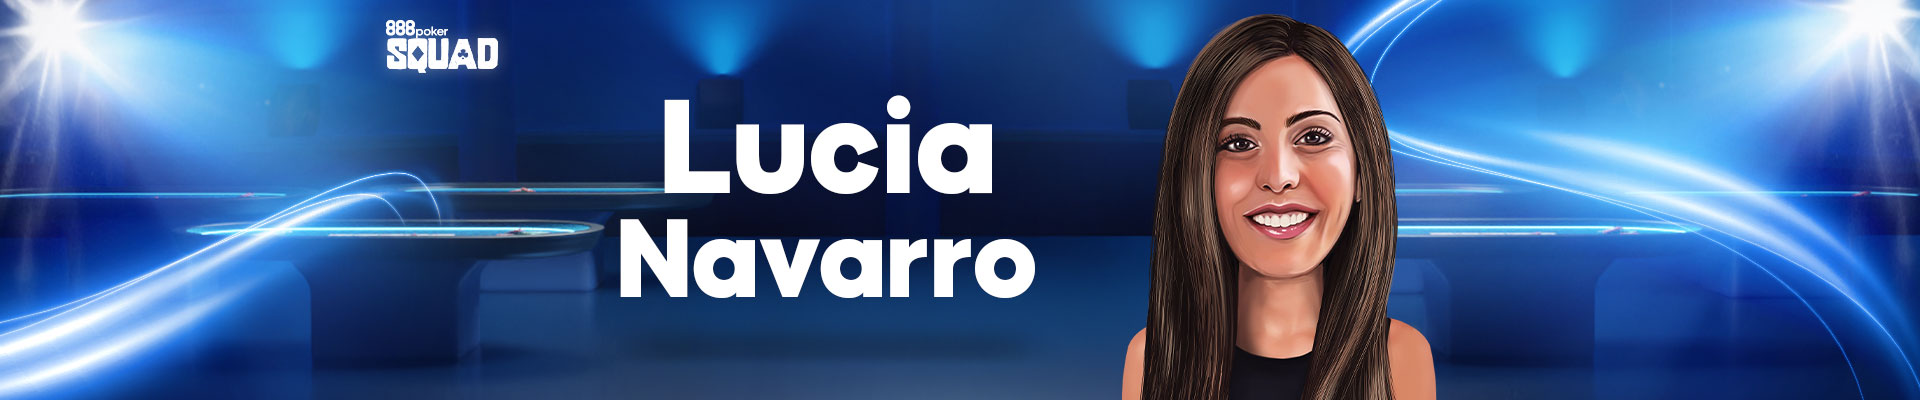 Lucia Navarro